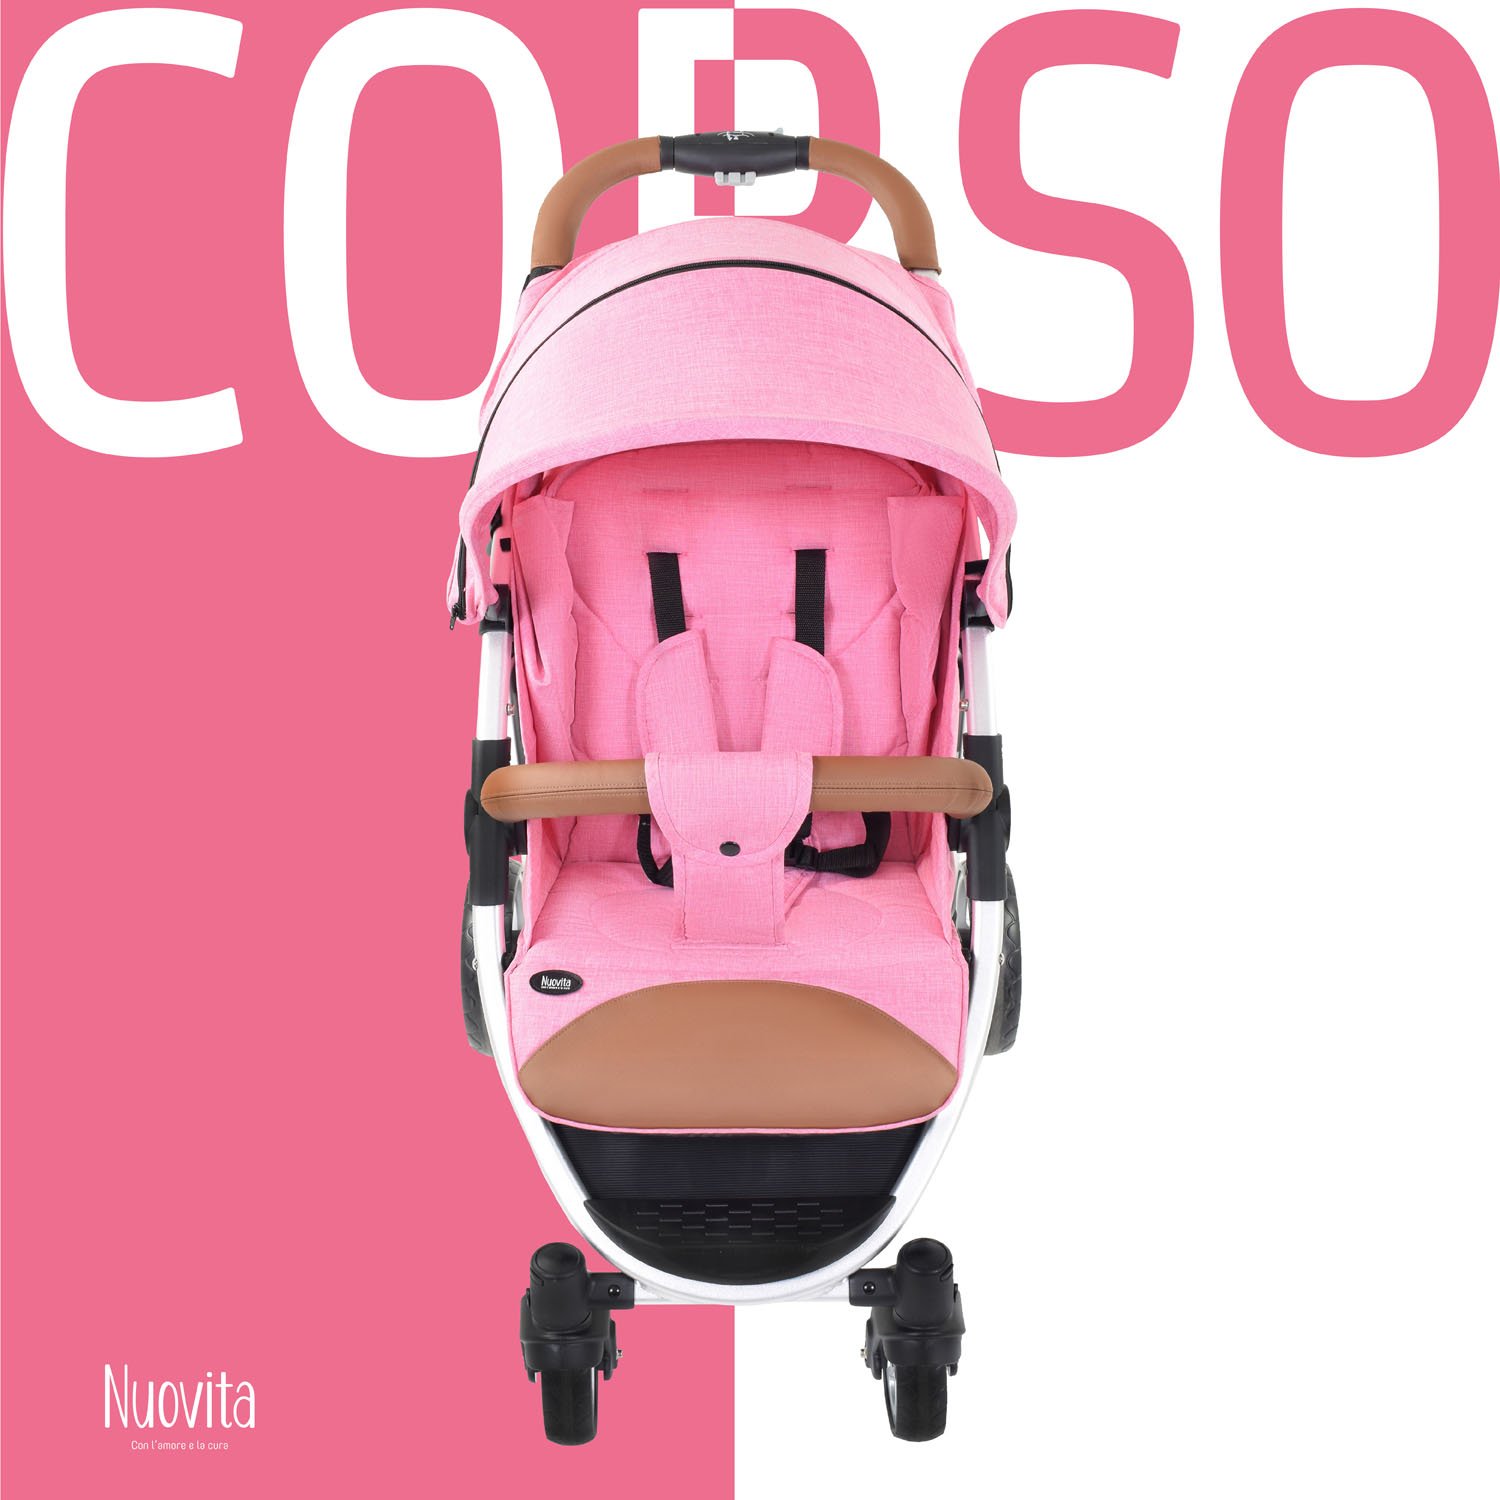 Прогулочная коляска Nuovita Corso (Rosa, Argento / Розовый, Серебристый)